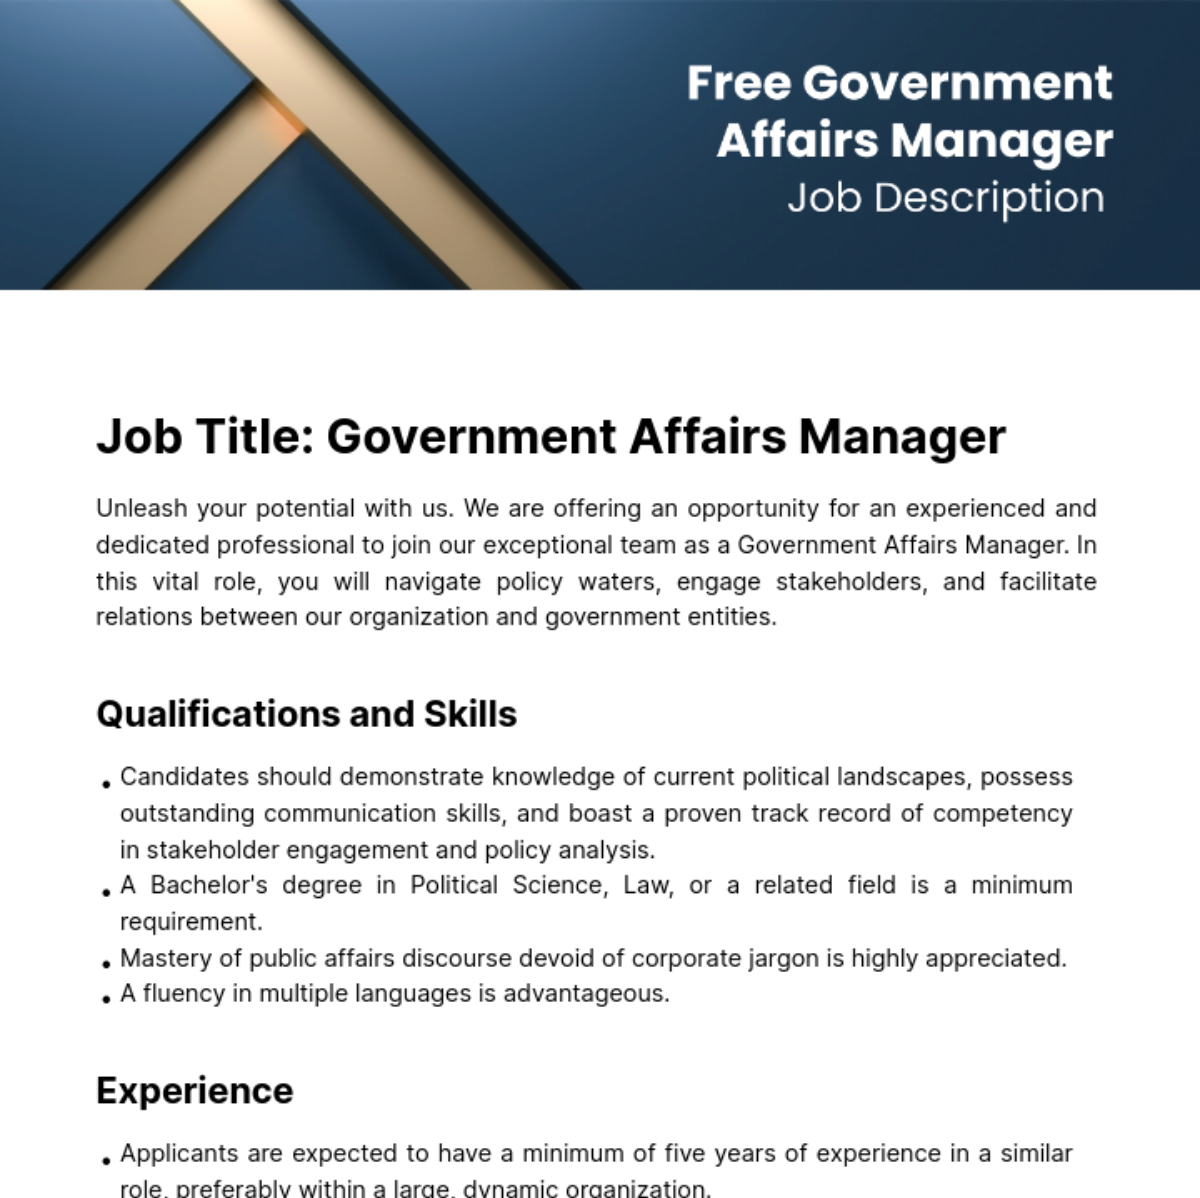 Free Government Affairs Manager Job Description Template